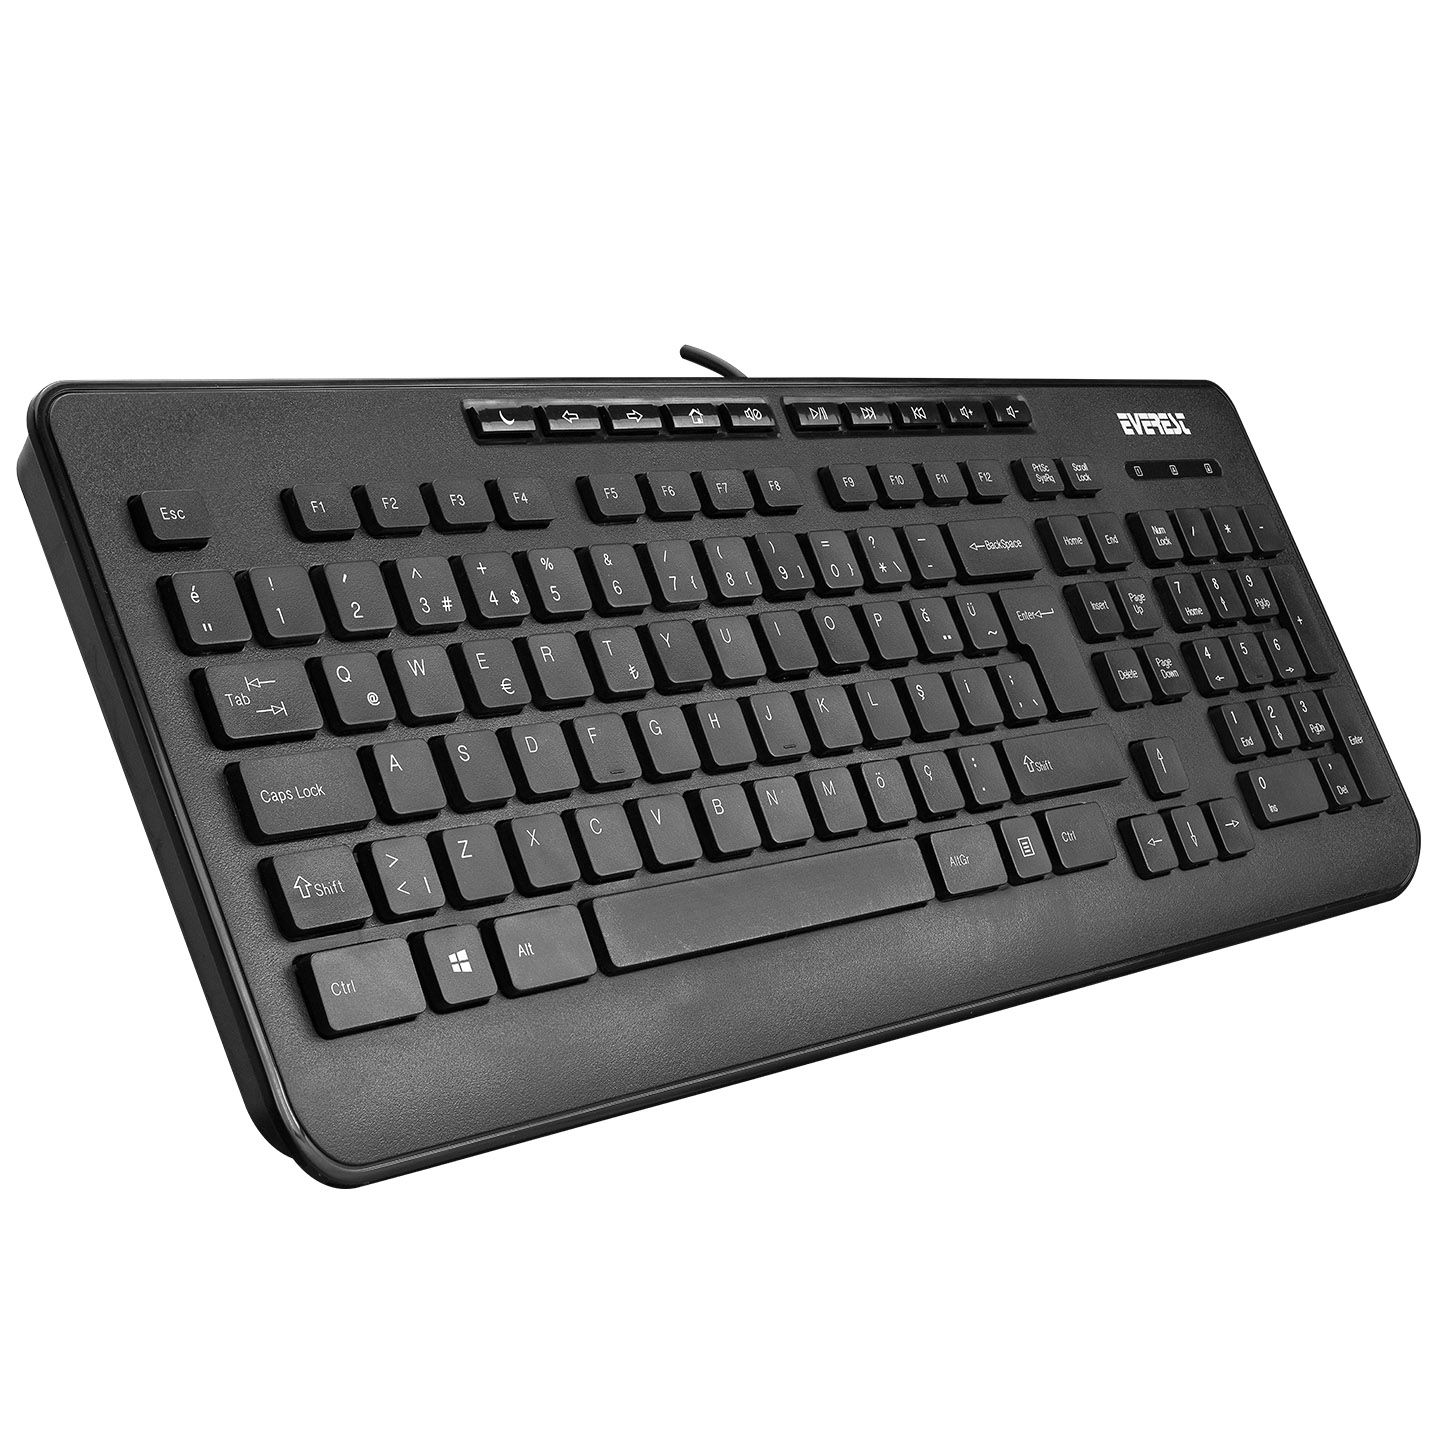 Everest DLK-3100U Black USB Q Multimedia Keyboard